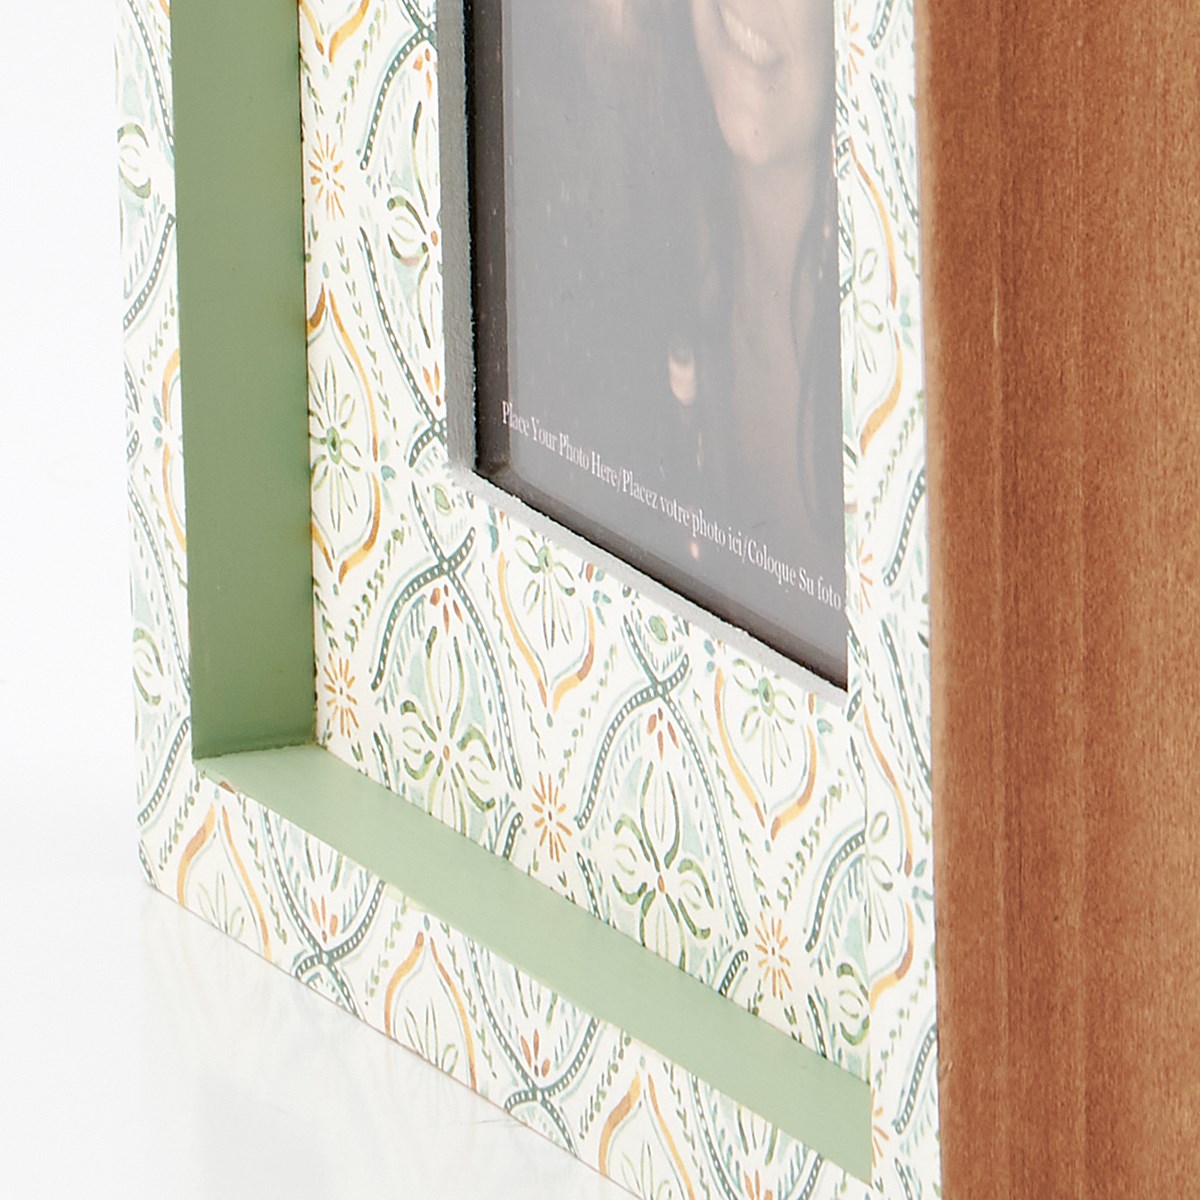 Green Mosaic Inset Box Frame - Wood, Glass